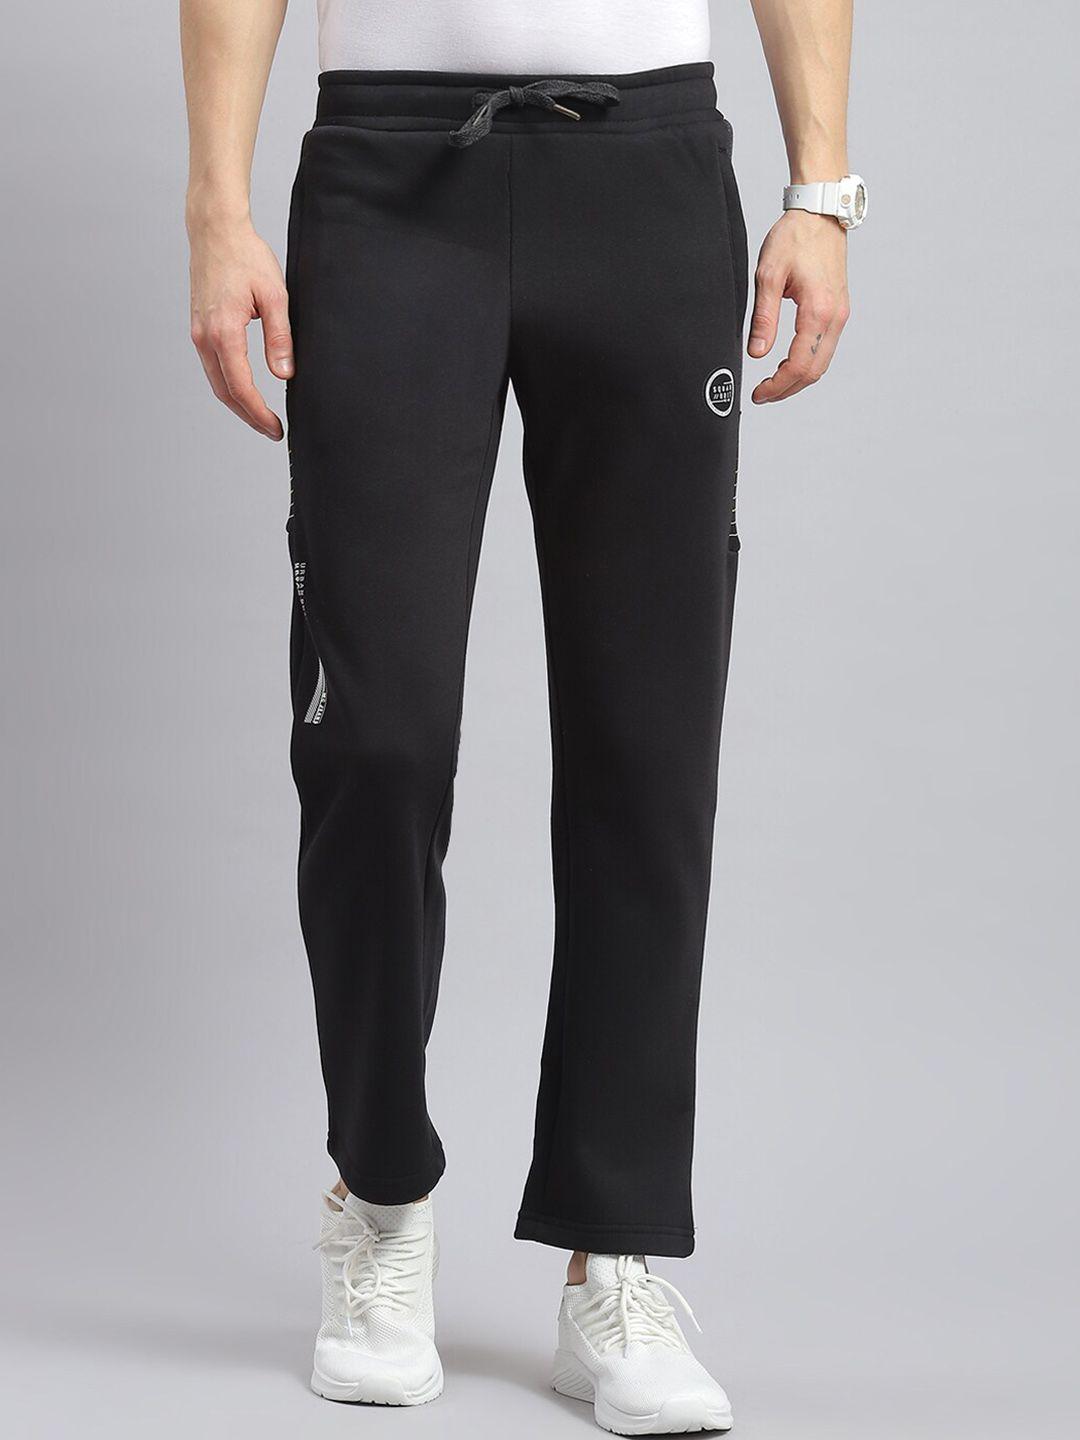 monte-carlo-men-regular-fit-mid-rise-cotton-trackpants